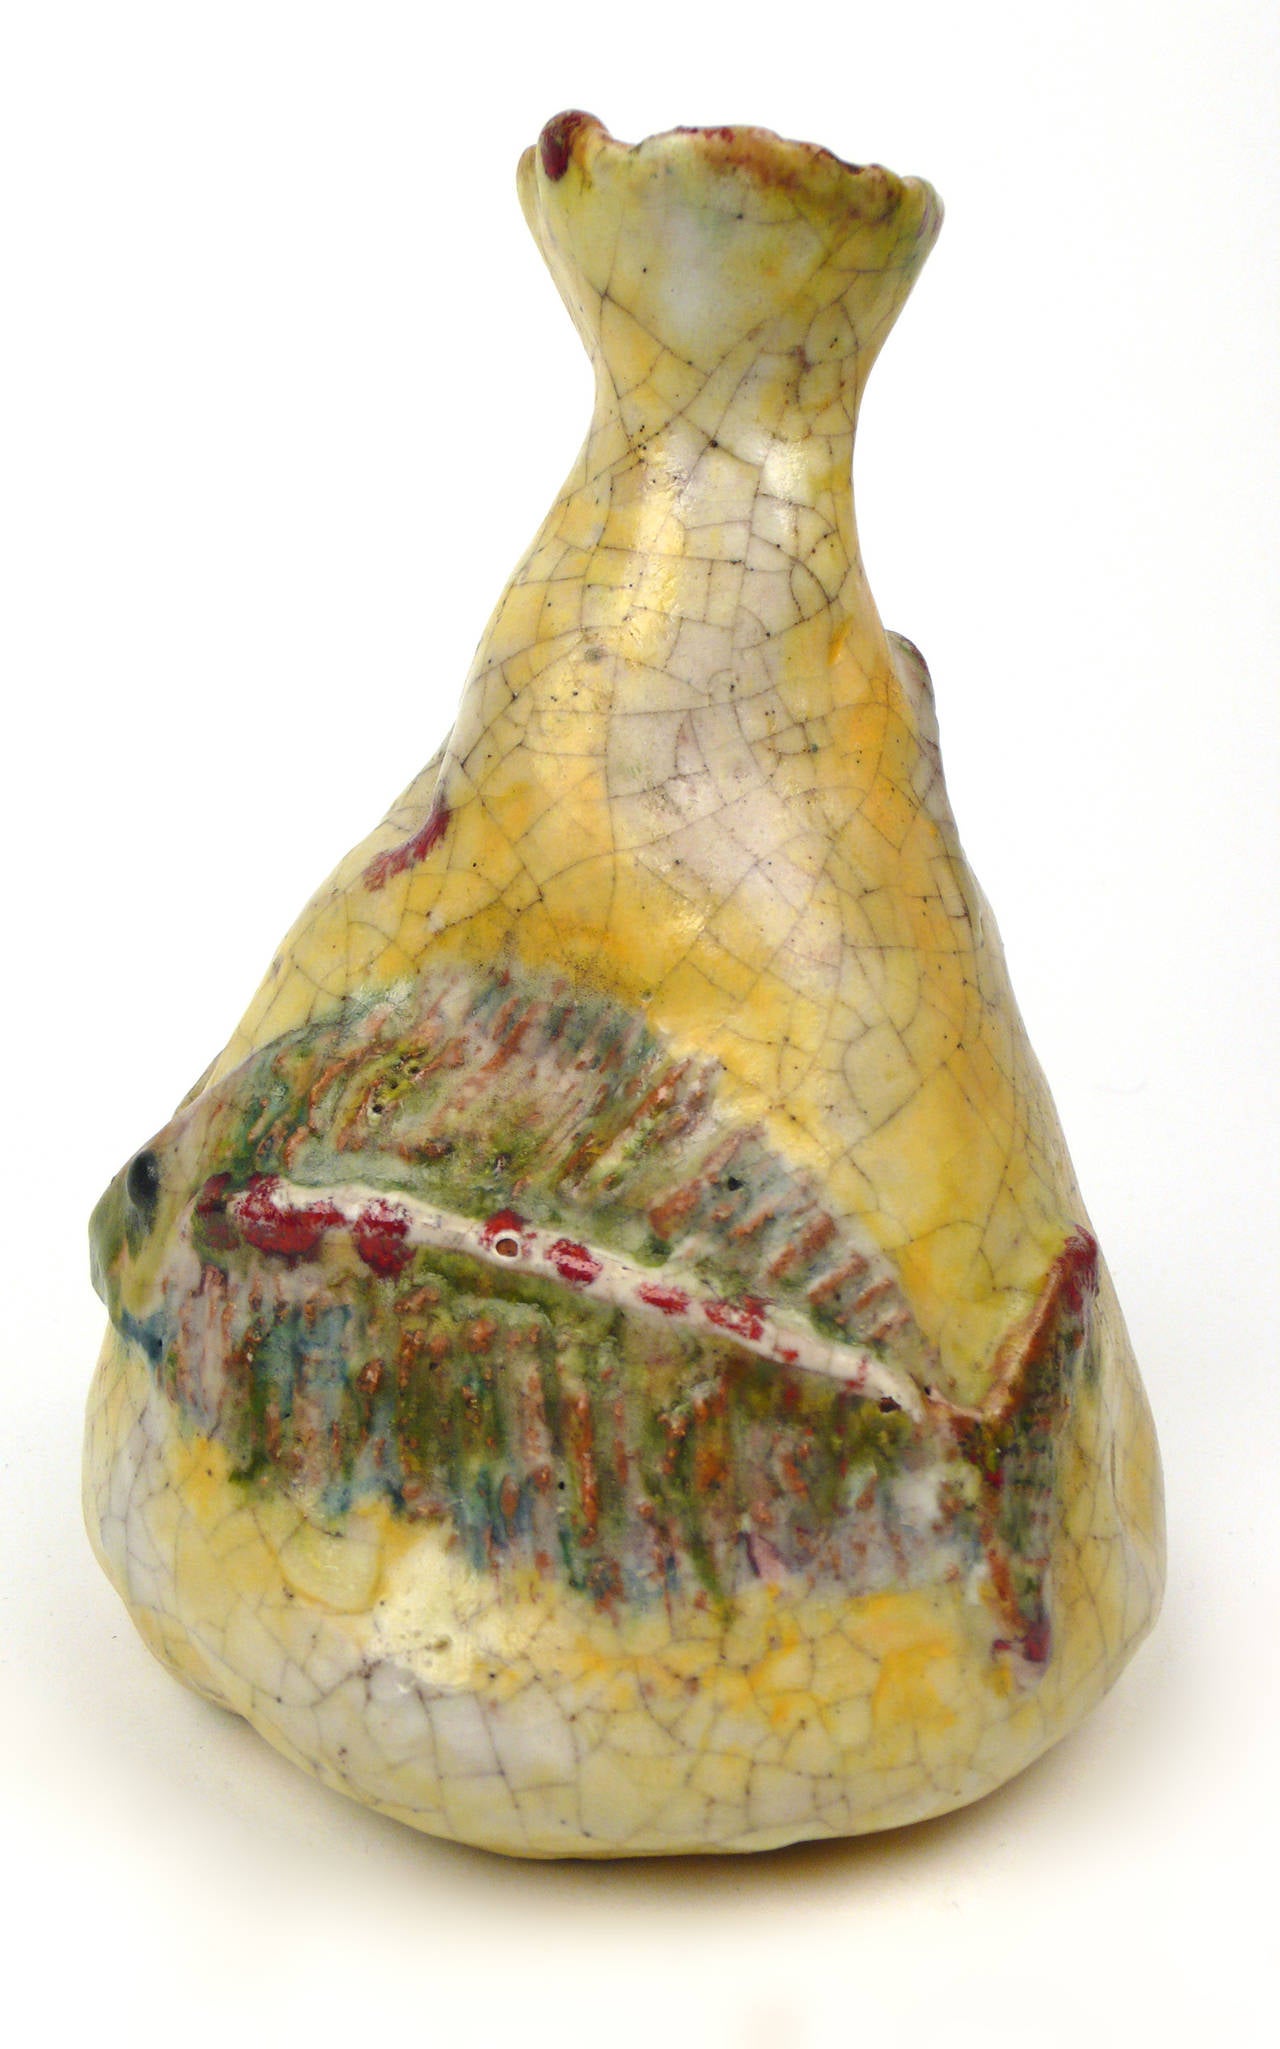 Marcello Fantoni glazed stoneware vase with aquatic theme made in Italy, circa 1960 signed to underside.